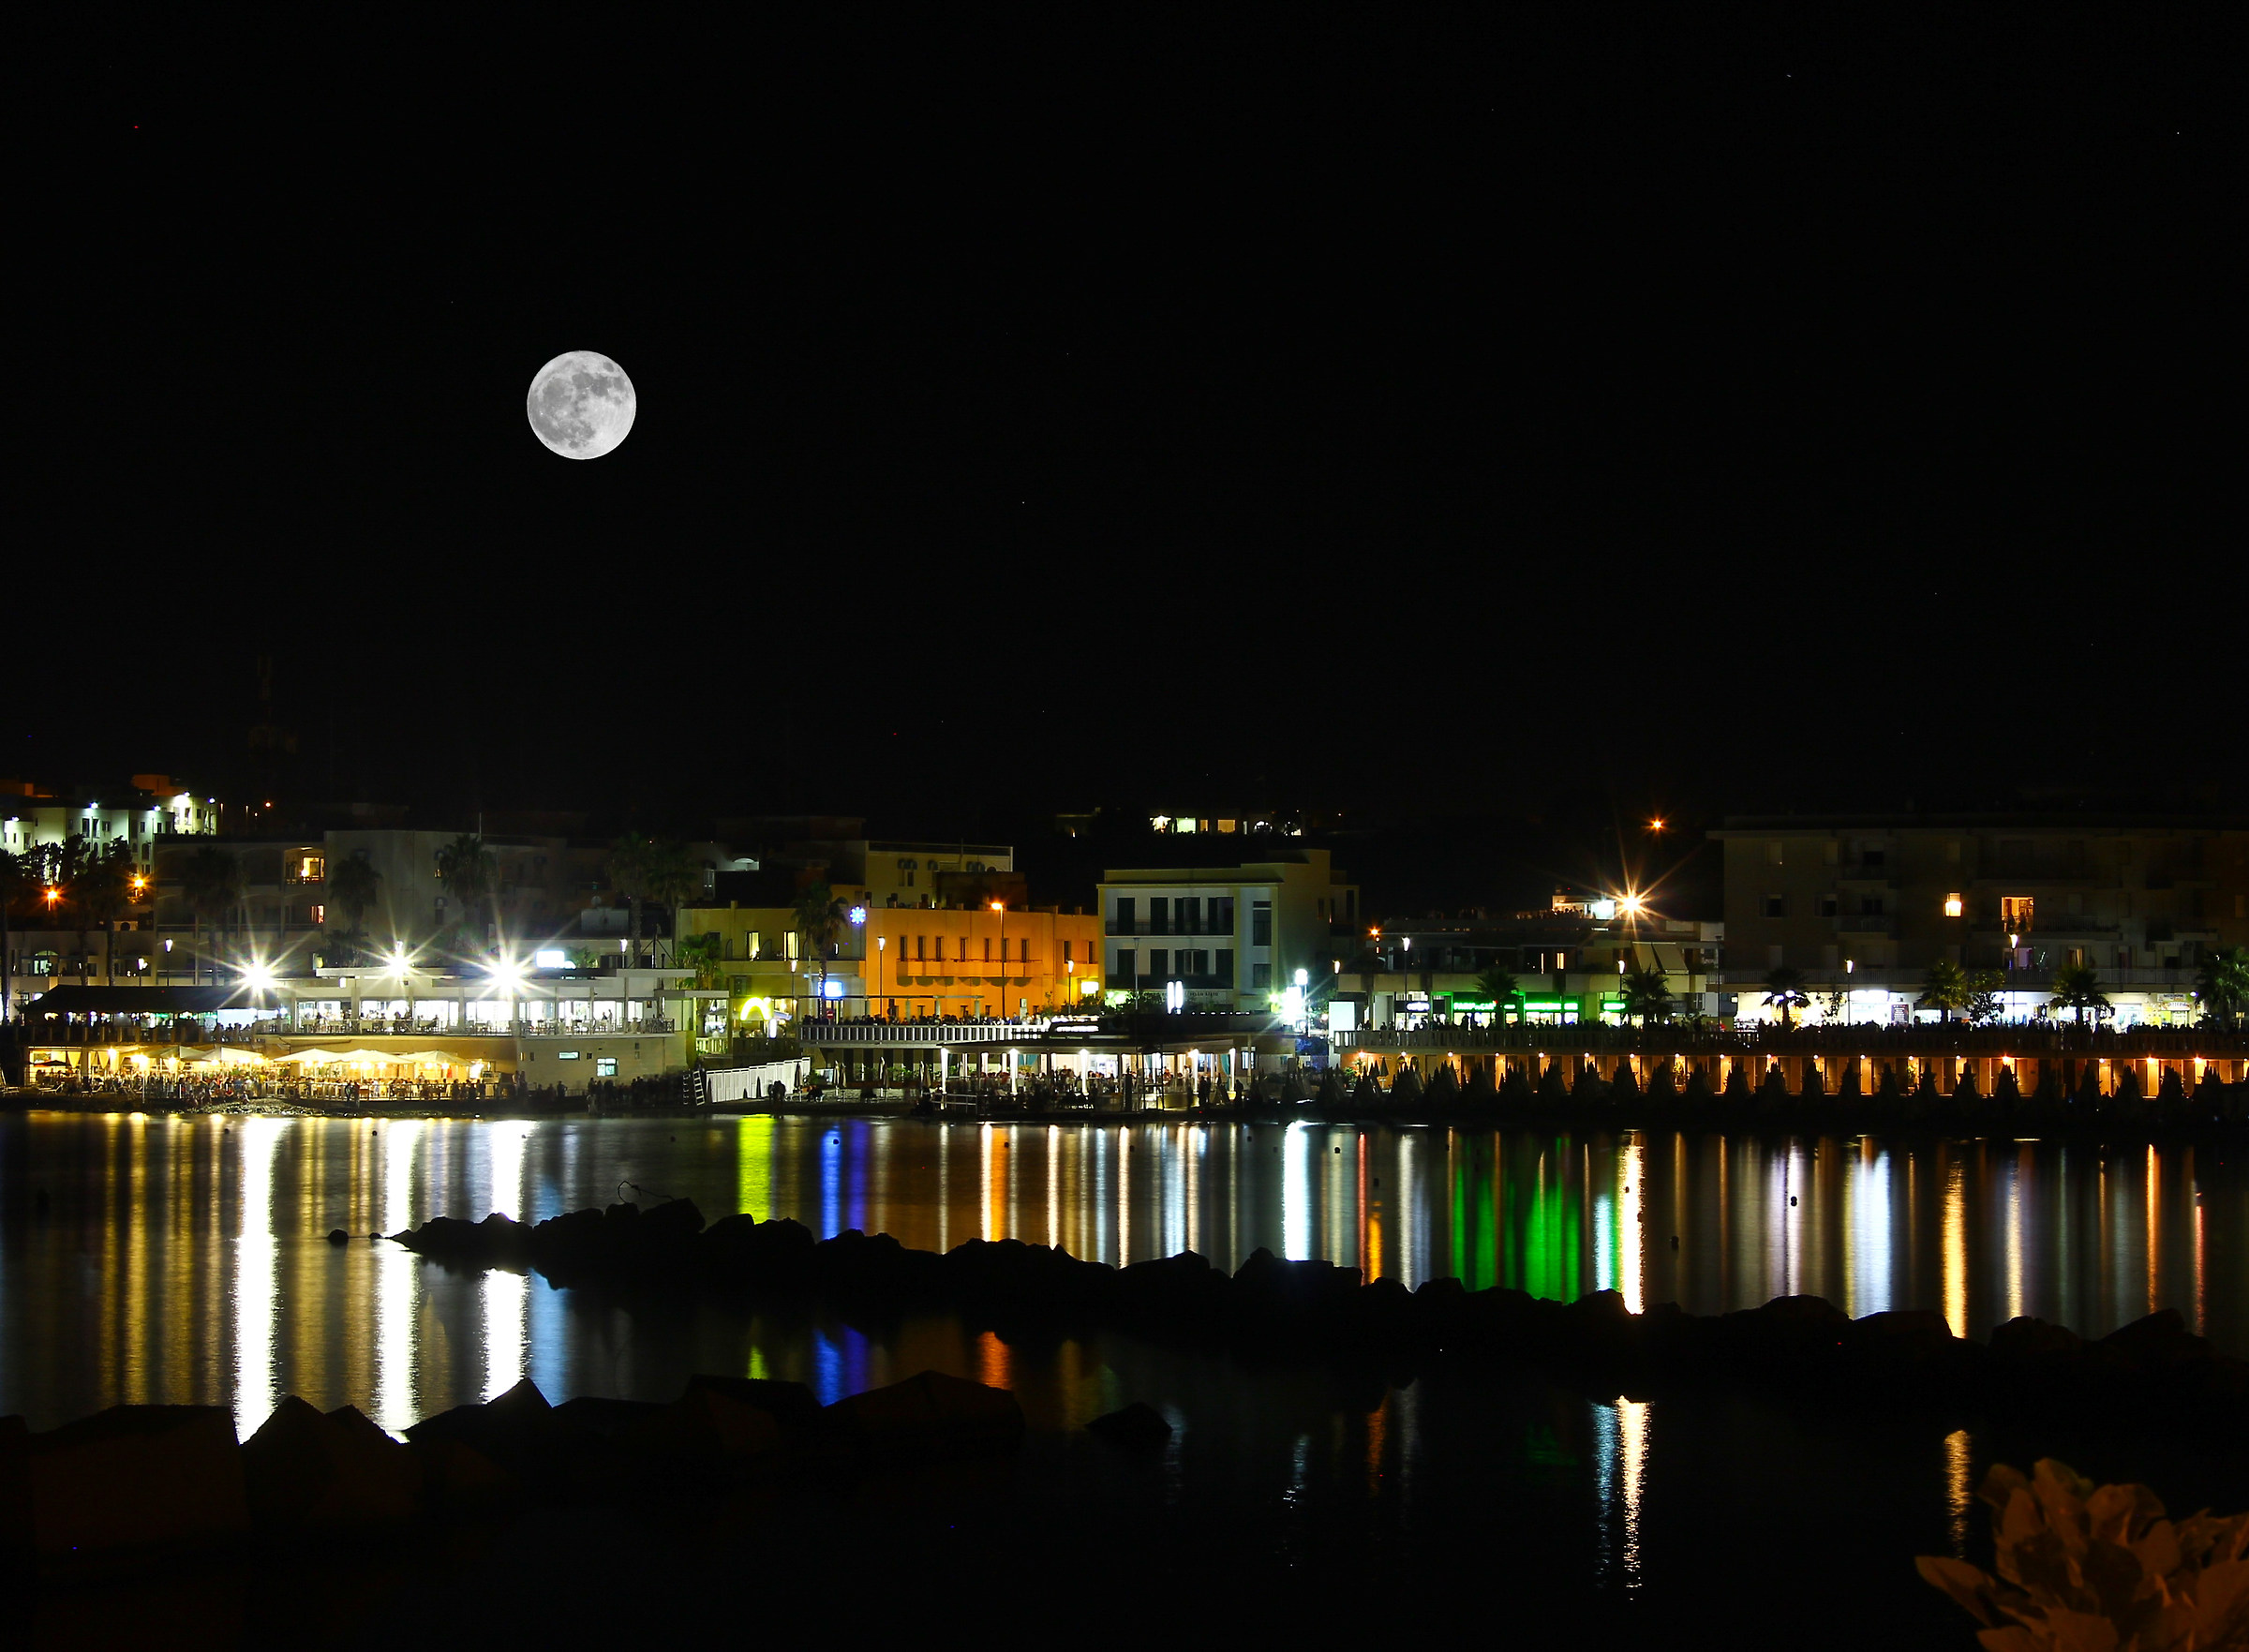 Otranto by night...